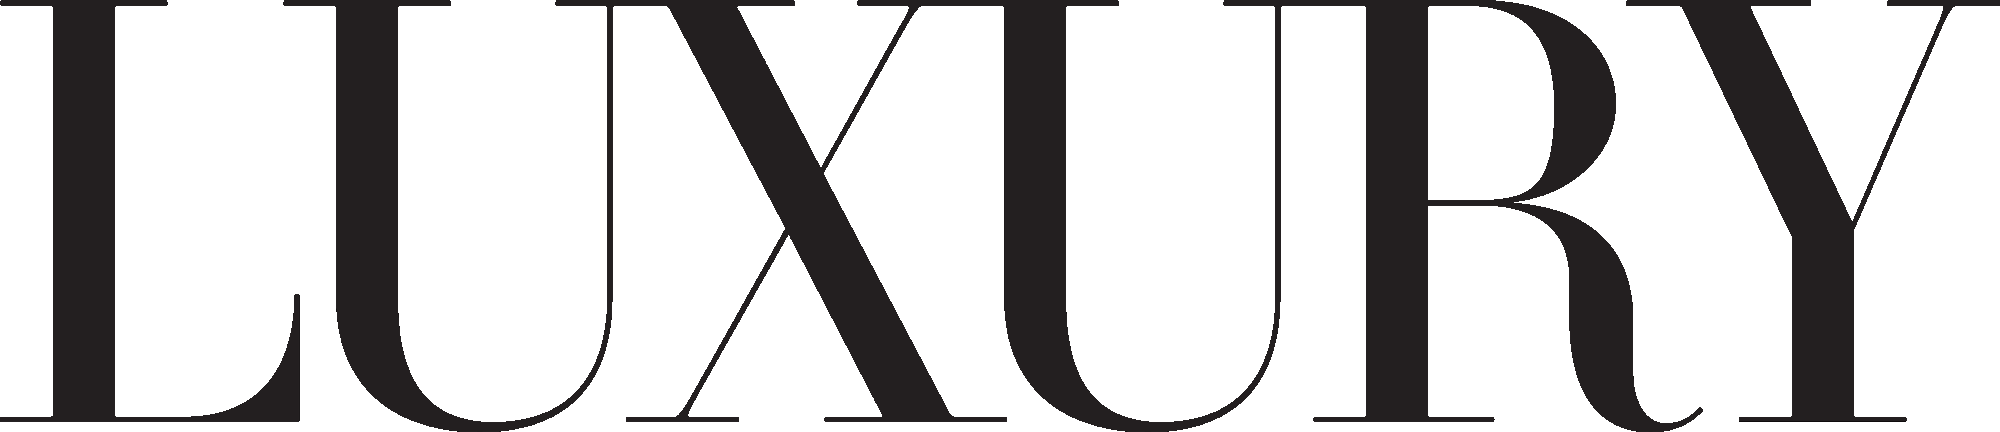 LUXURY logo black